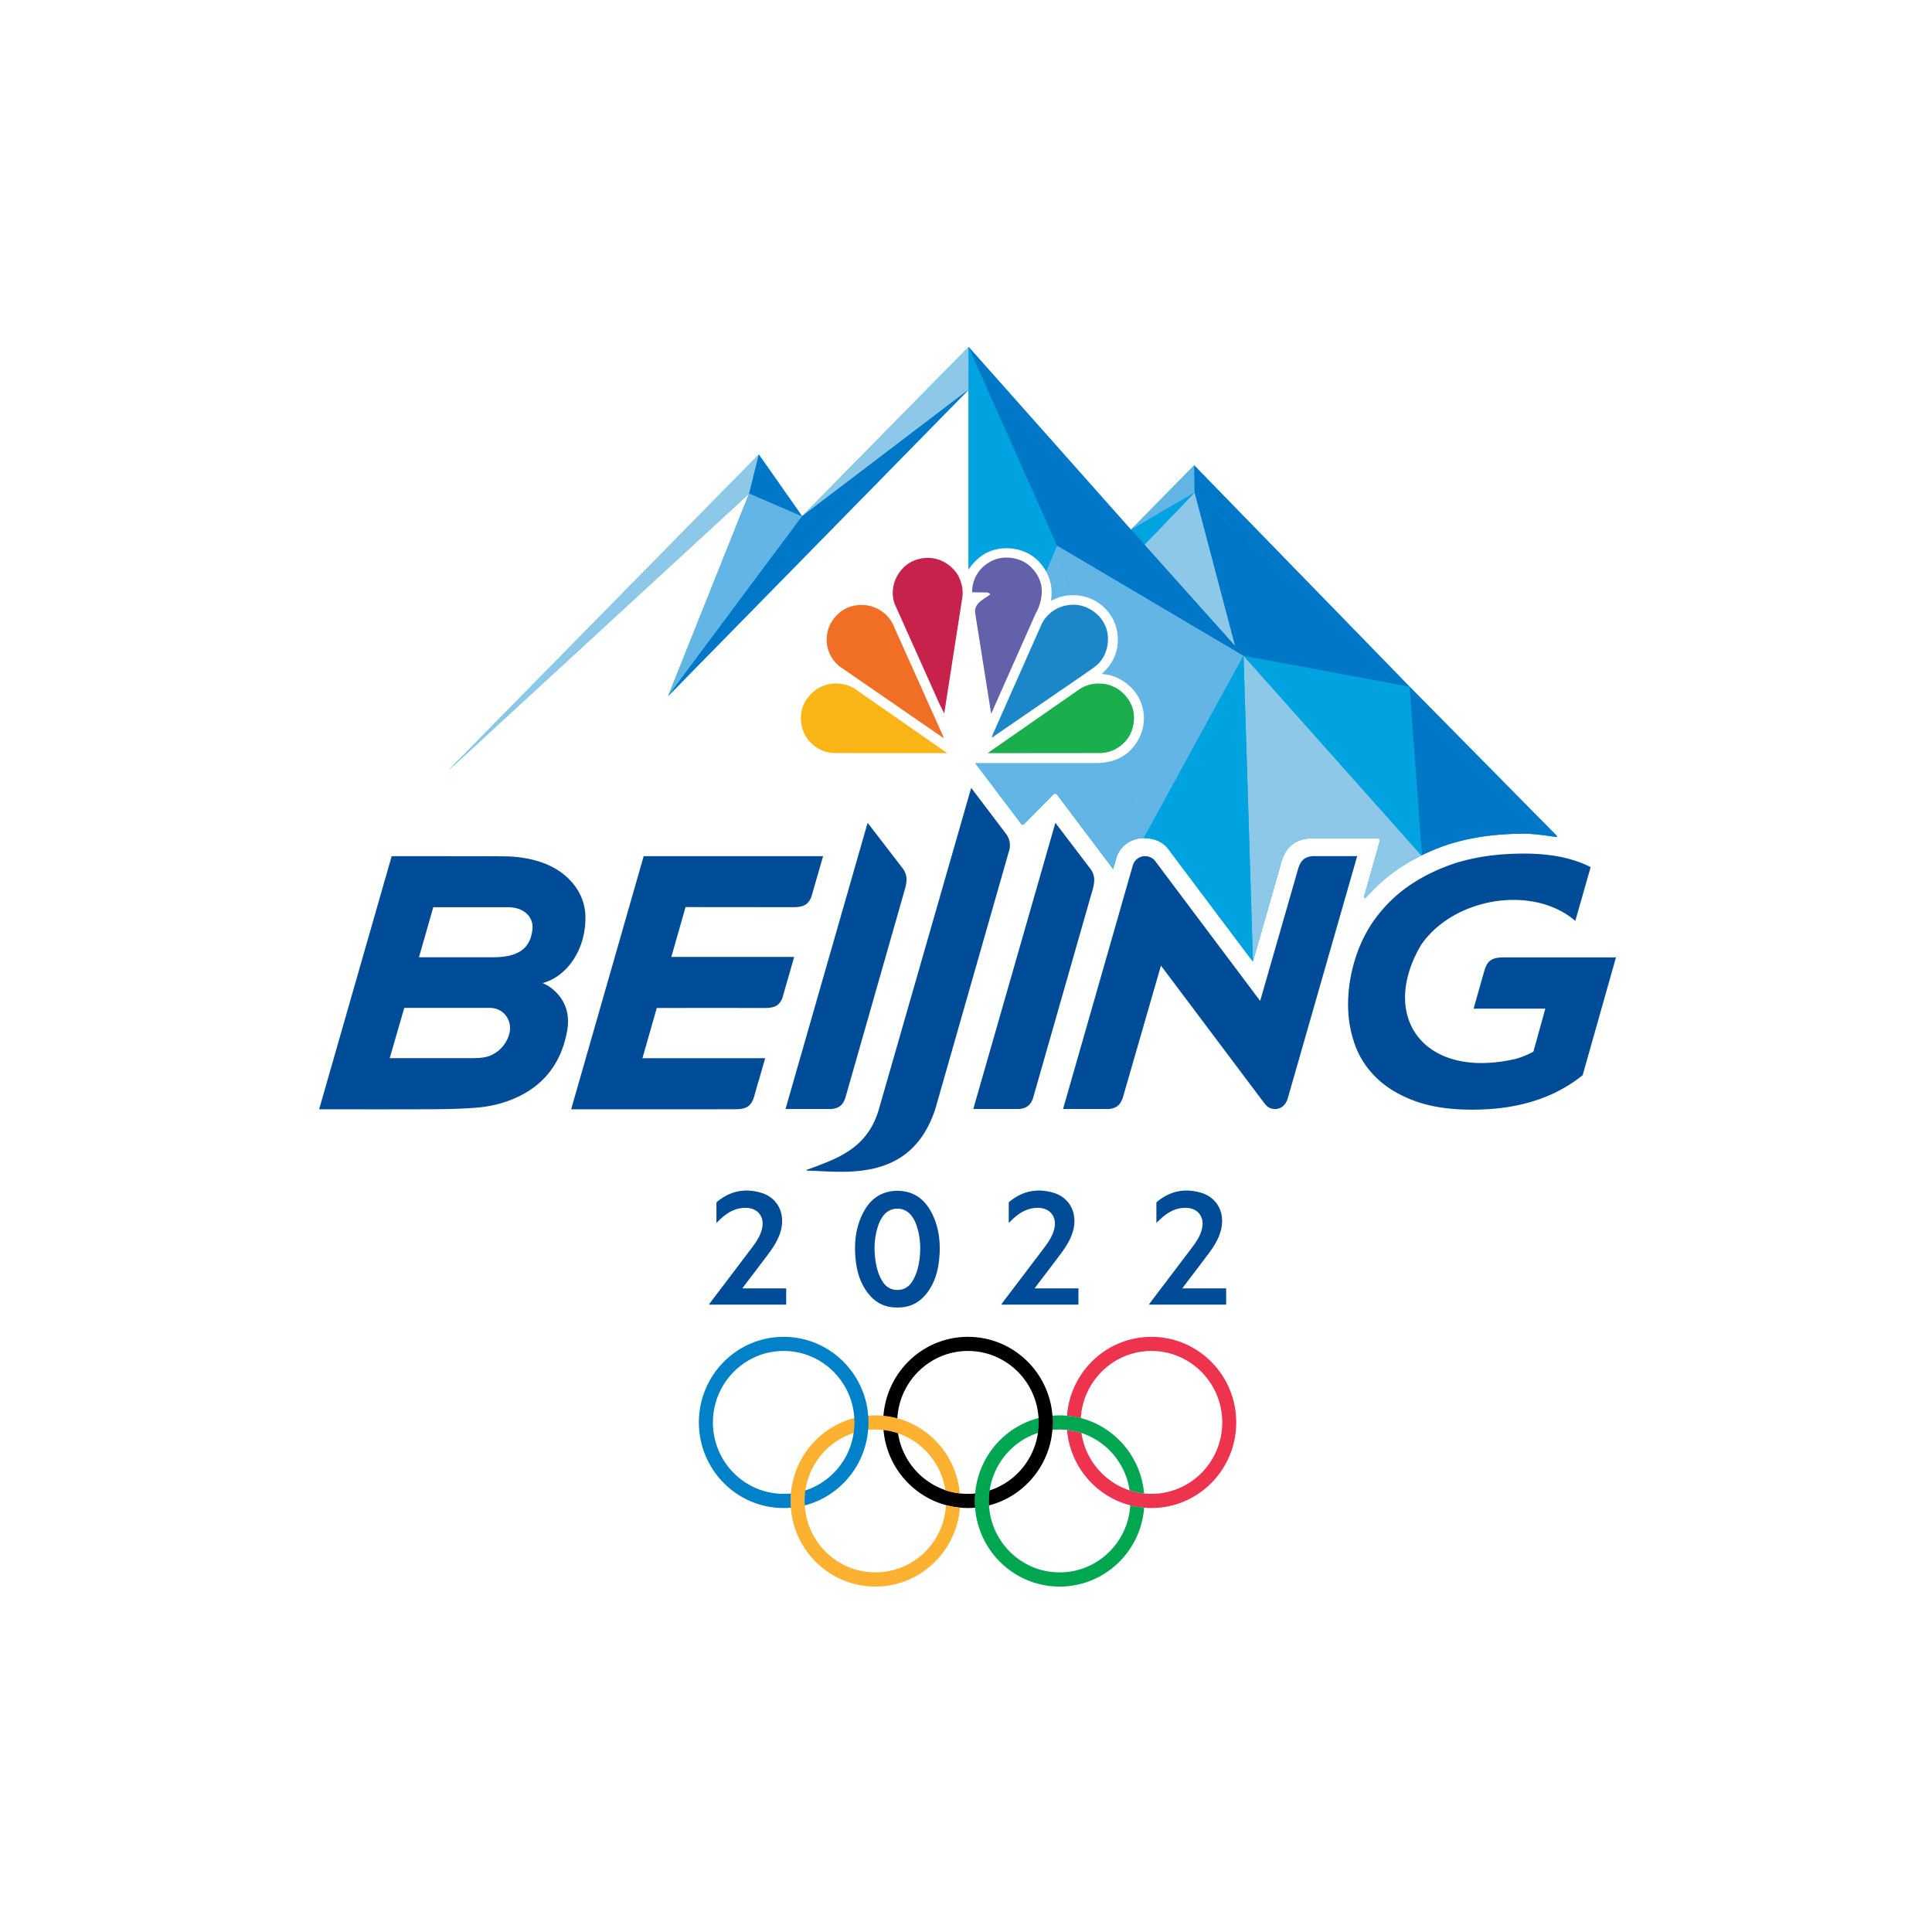 NBC OLYMPICS TO PRESENT EXCLUSIVE LIVE COVERAGE OF U.S